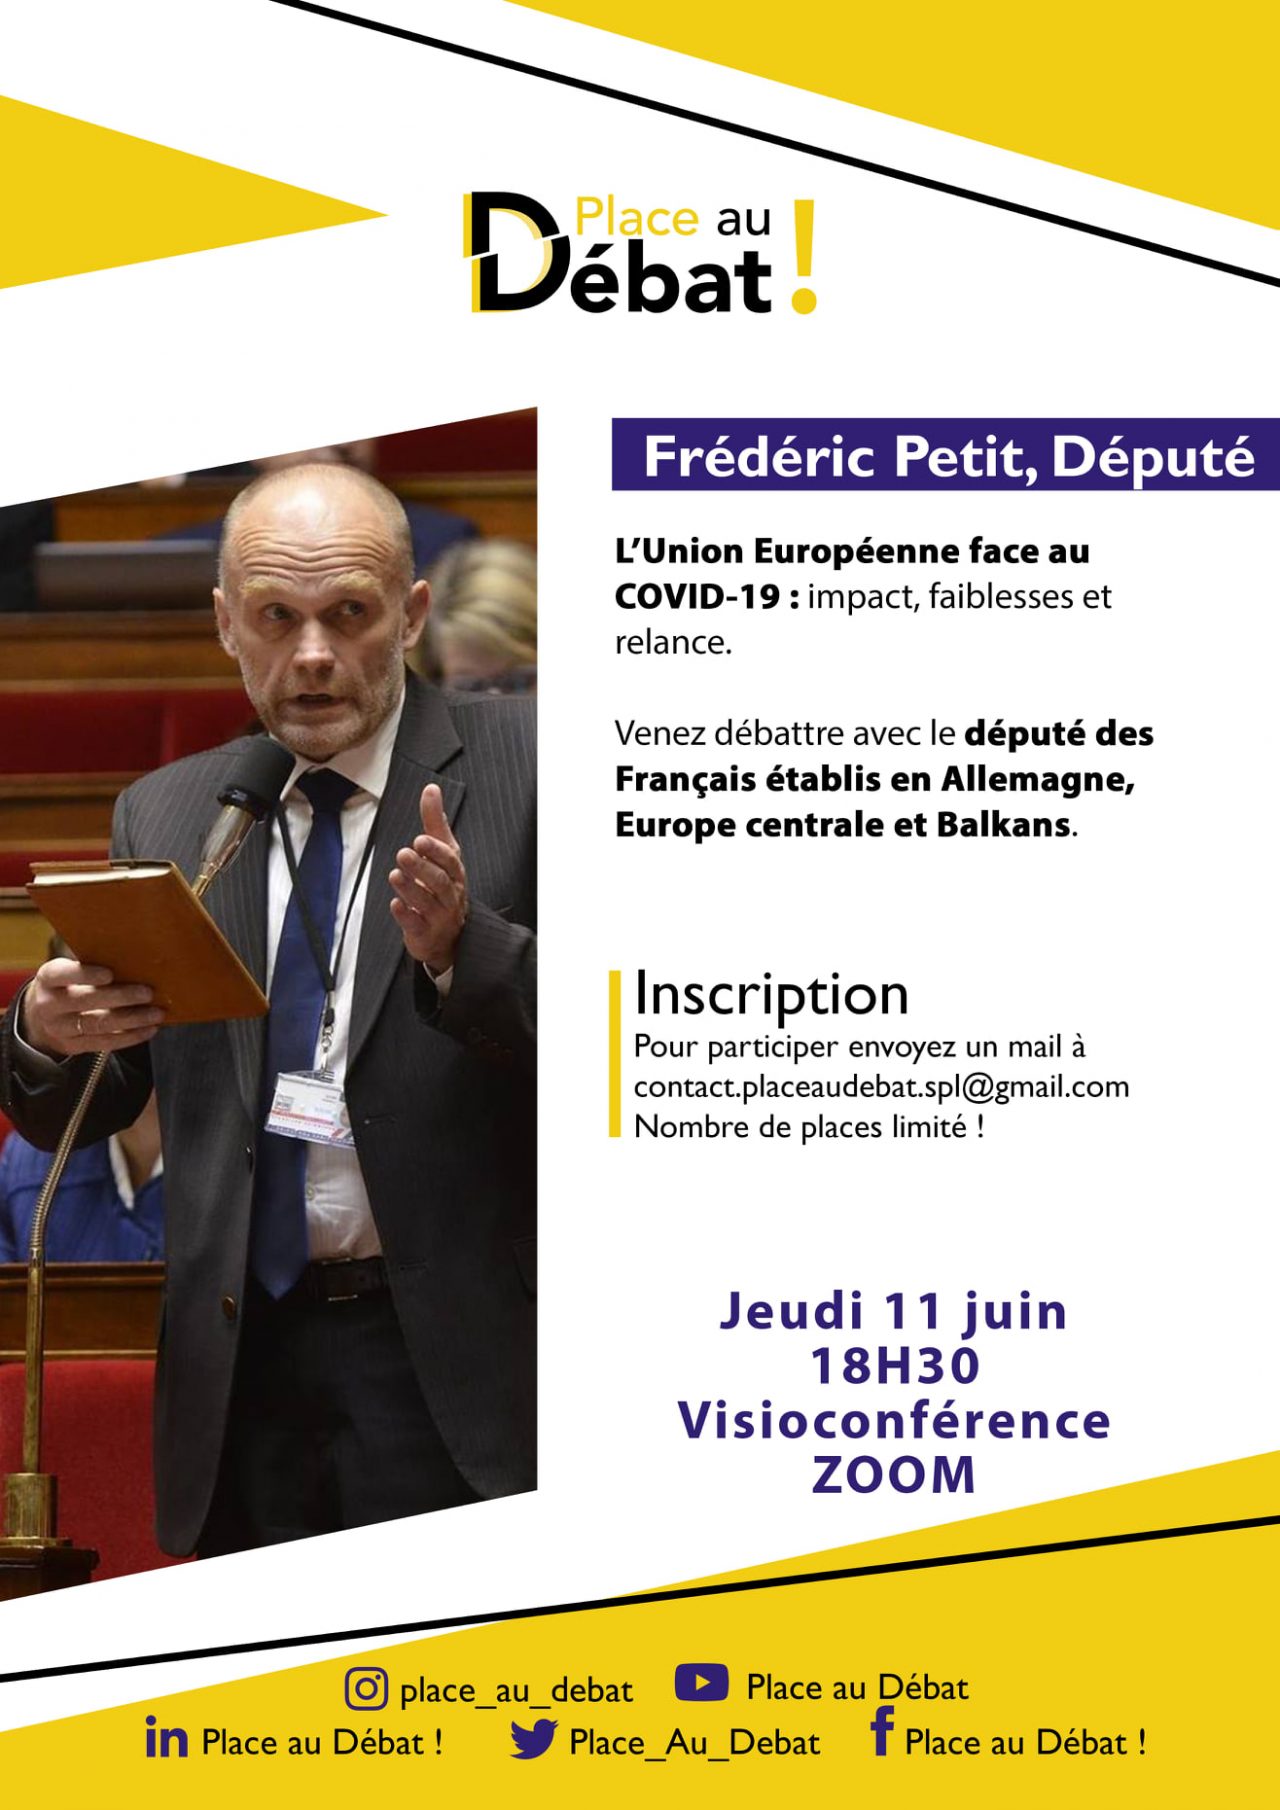 https://frederic-petit.eu/wp-content/uploads/2021/03/Place-au-debat-1280x1810.jpg